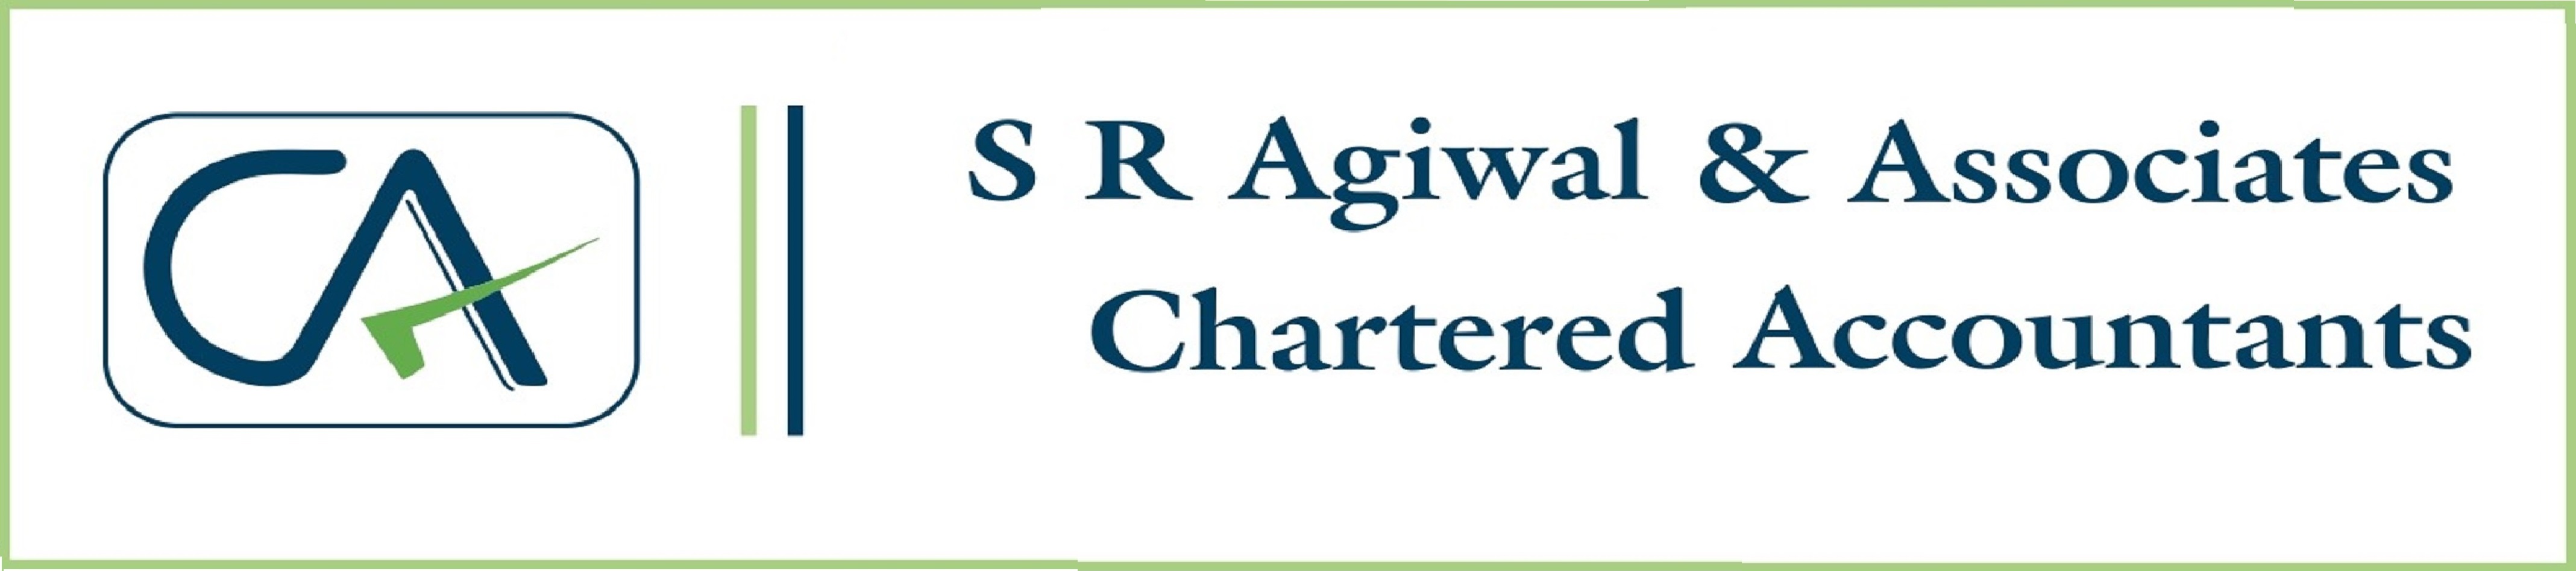 S R Agiwal & Associates